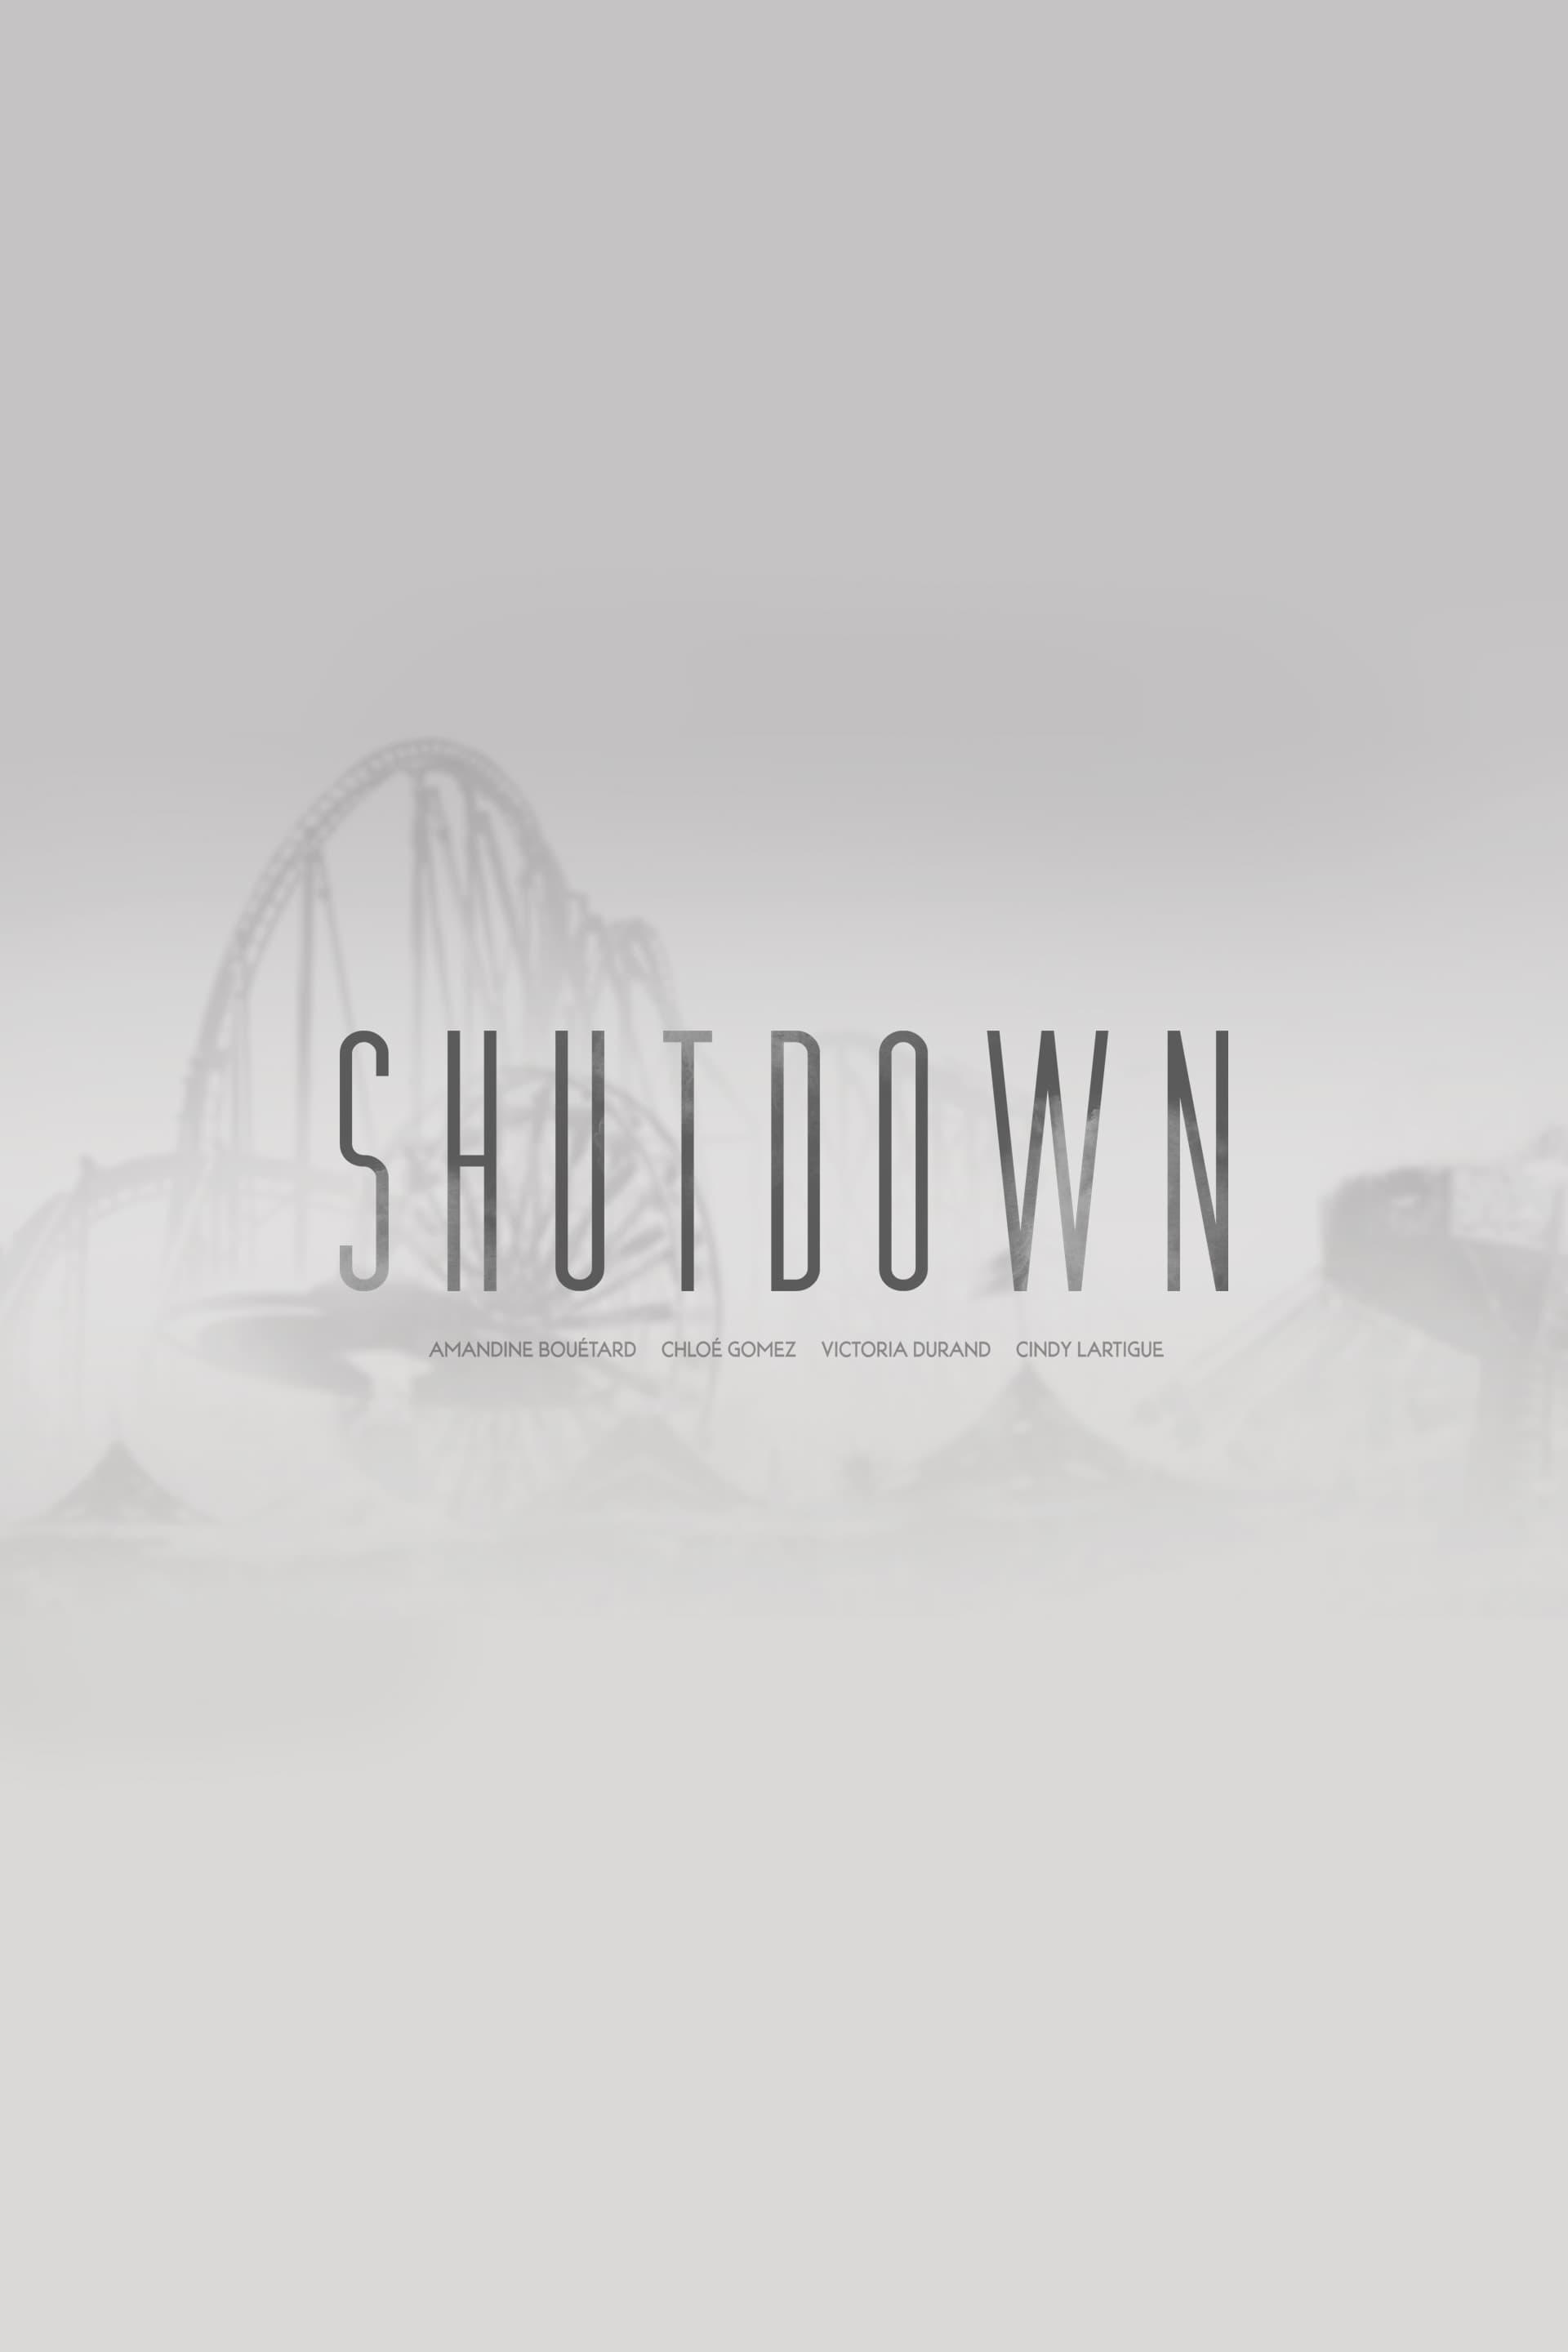 Shutdown poster